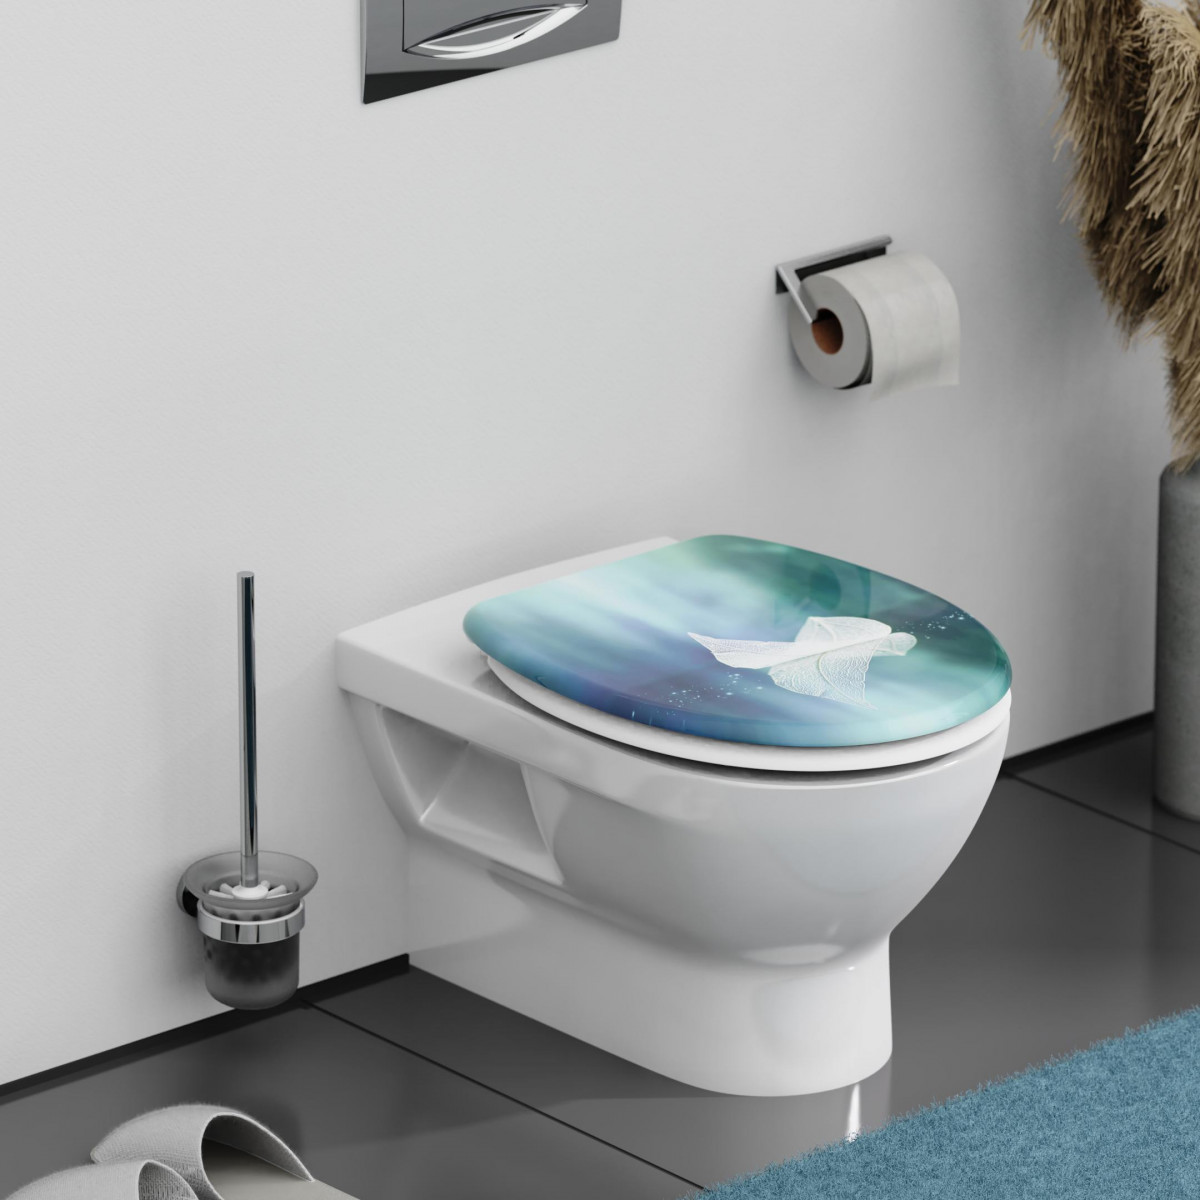 Duroplast Toilet Seat FALLEN LEAF with Soft Close